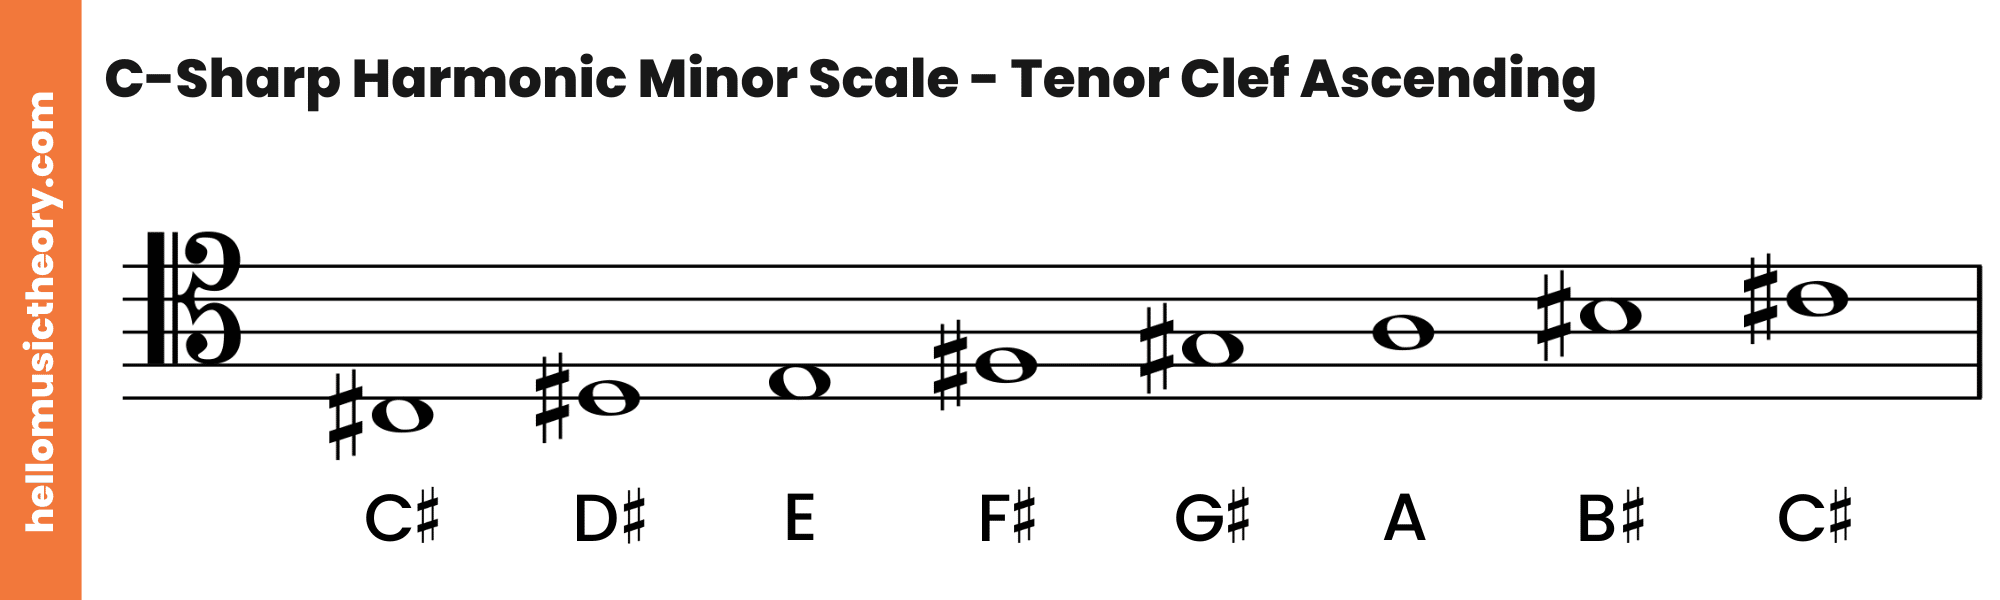 C-Sharp Harmonic Minor Scale Tenor Clef Ascending